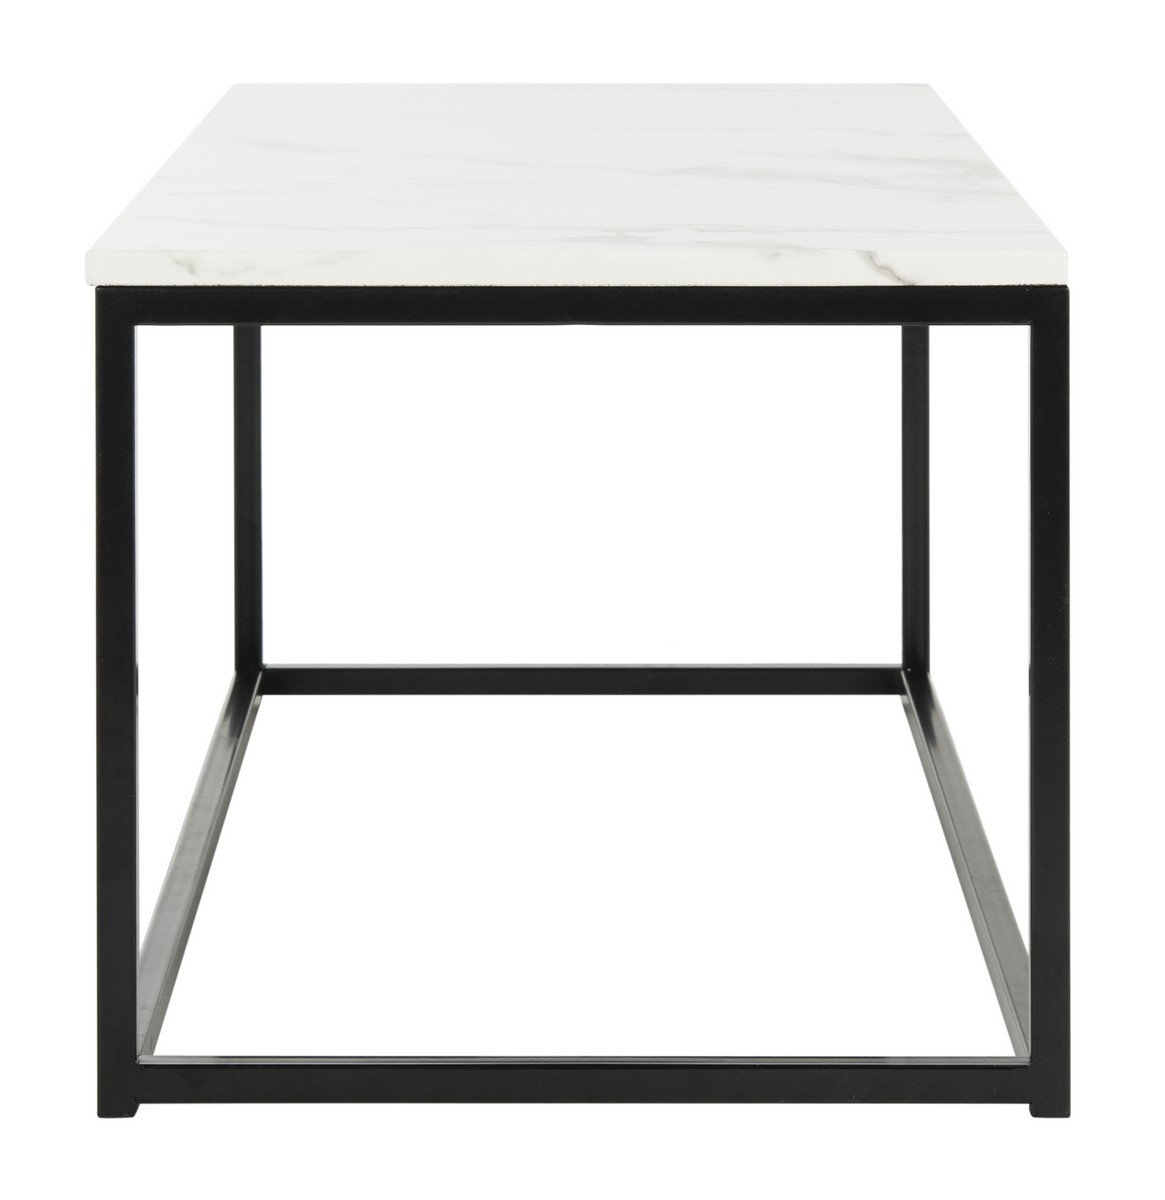 Baize Coffee Table - White/Grey - Arlo Home - Image 2